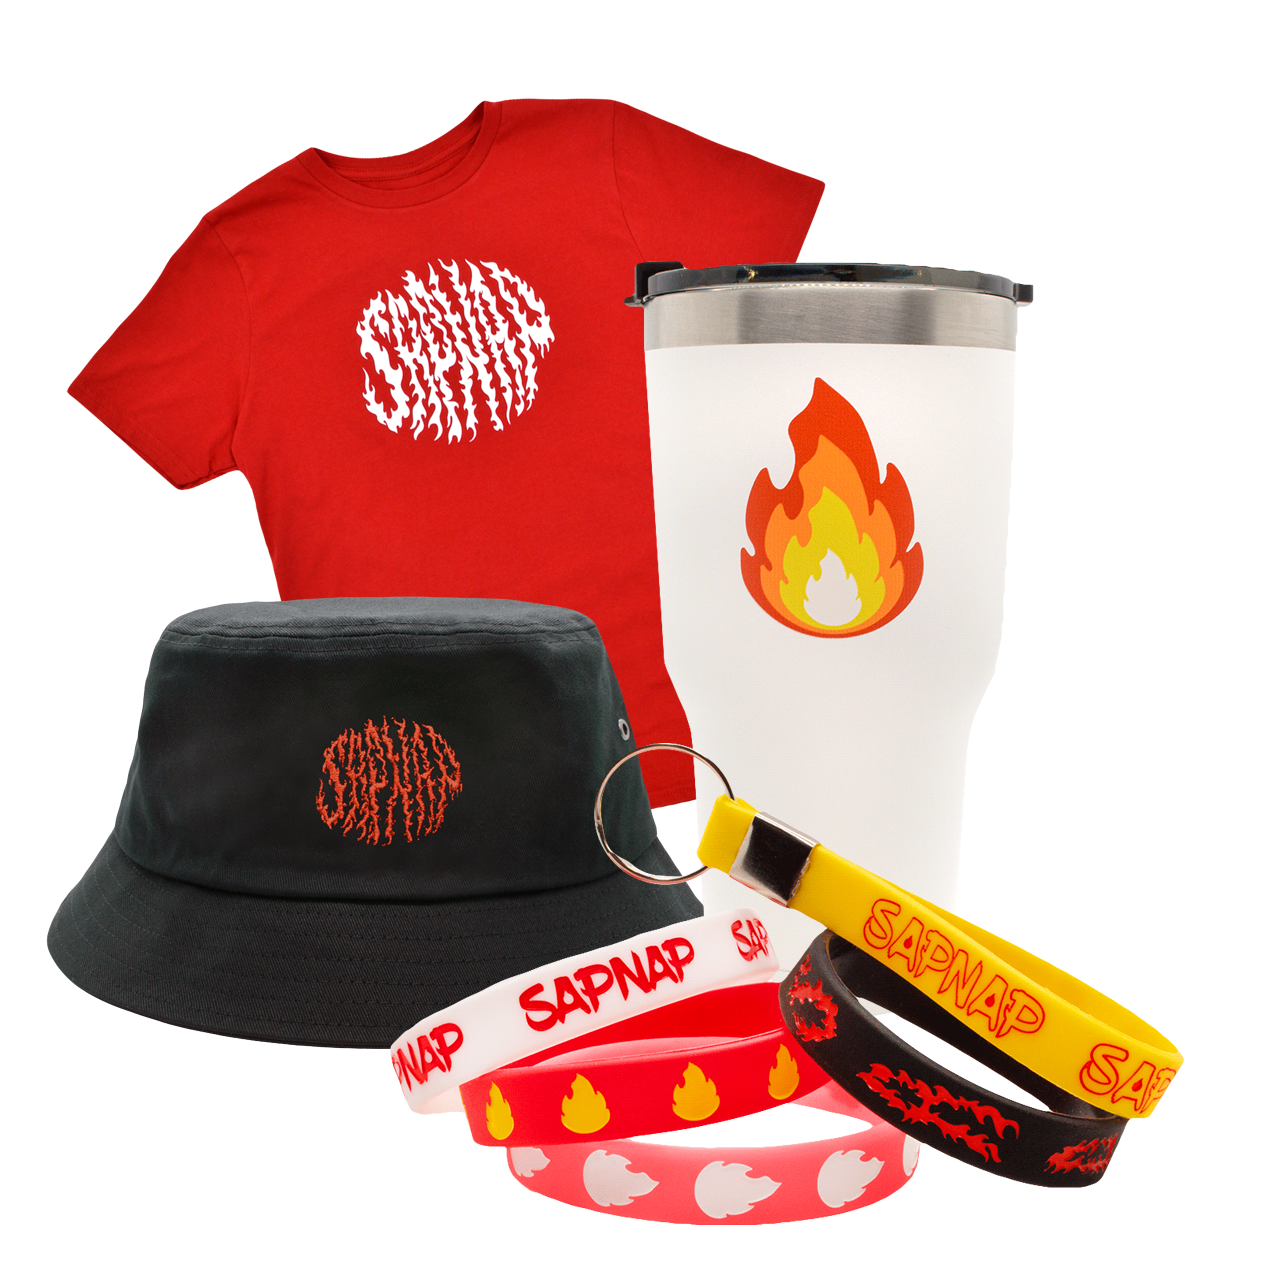 Sapnap Flame hat, Dream Smp Sapnap, Sapnap MCYT gifts, Sapnap r